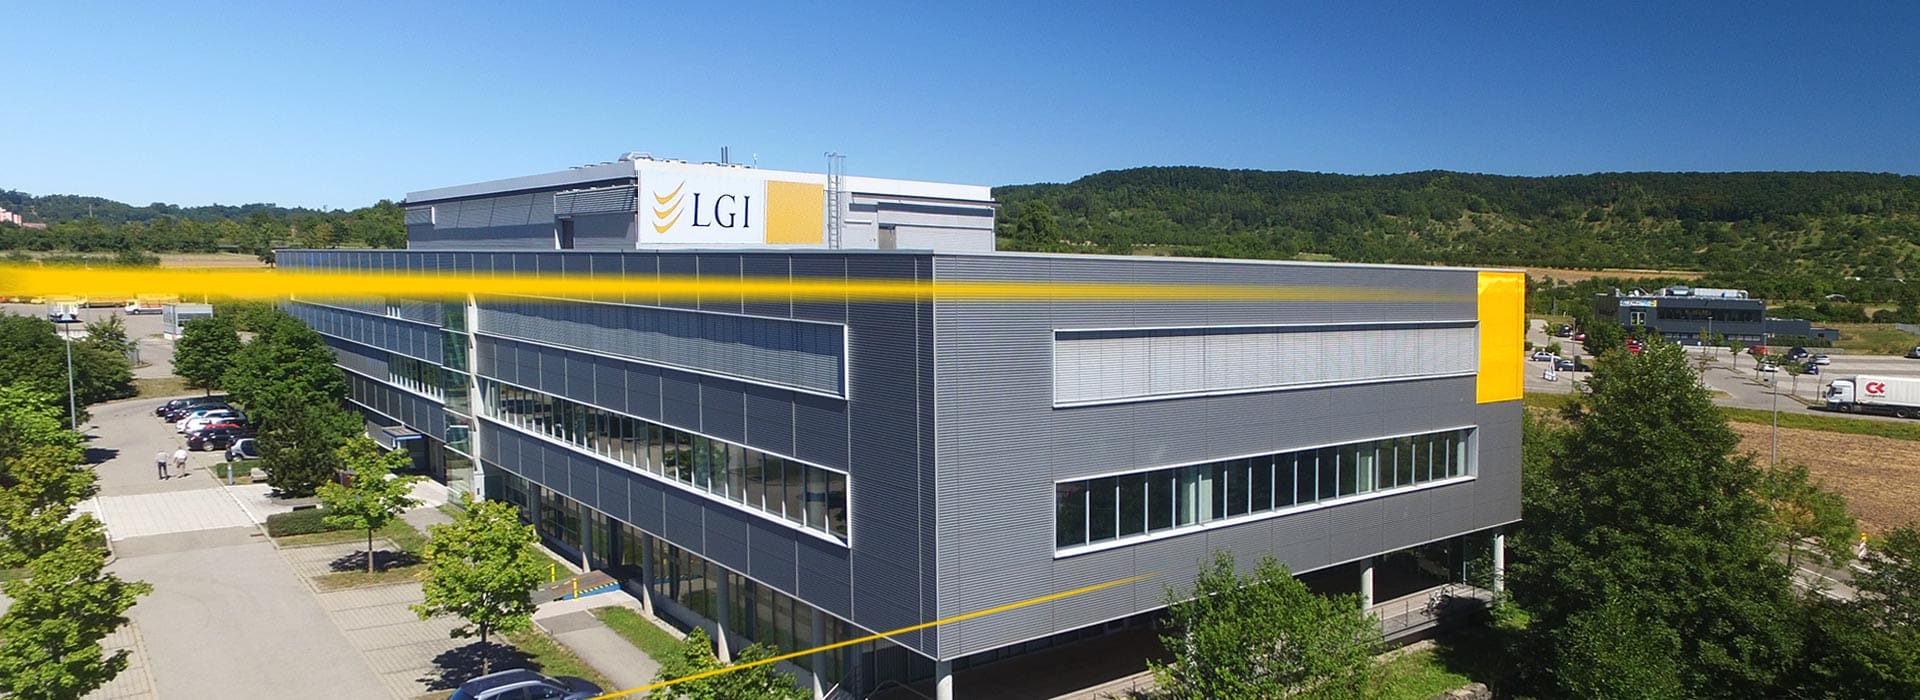 LGI logistic building